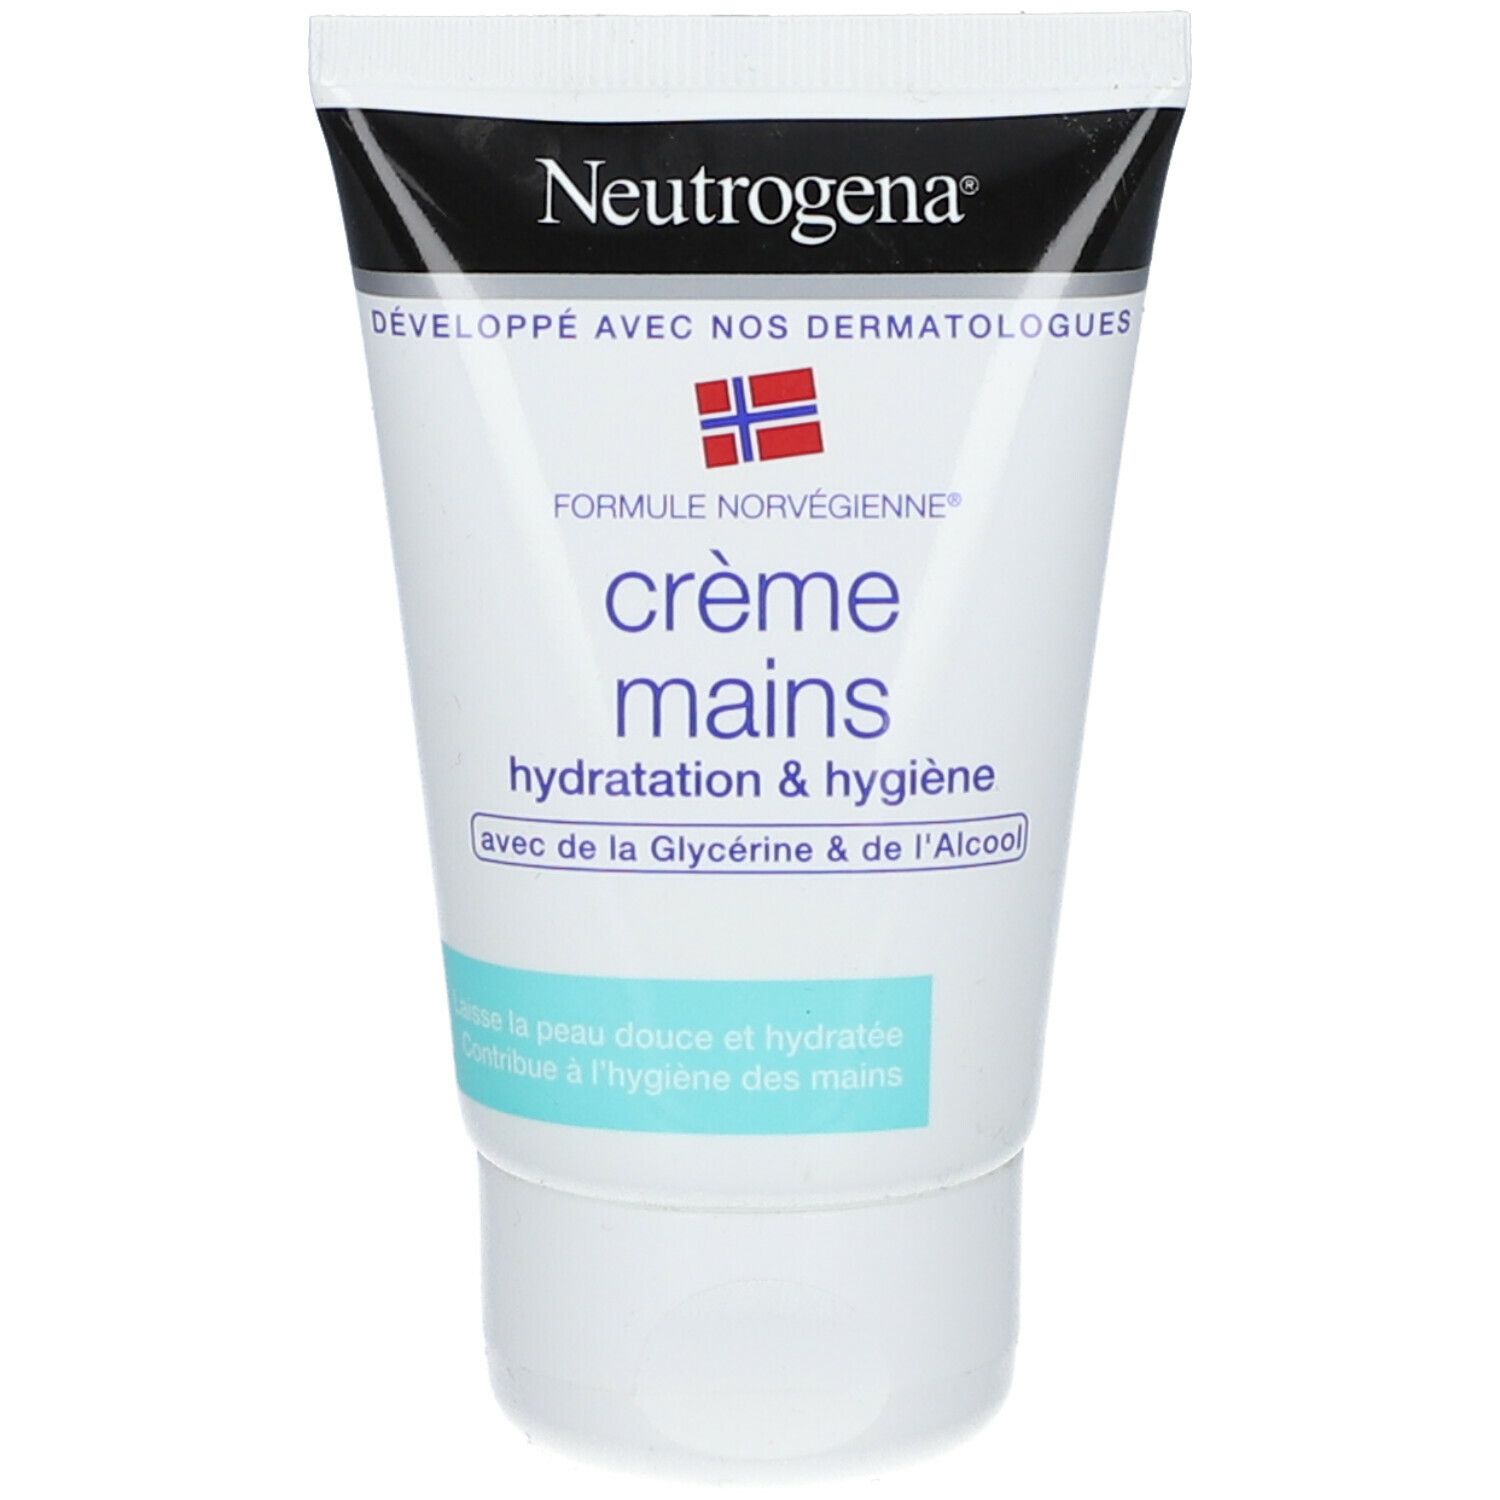 Neutrogena® Formule Norvegienne® Crème Mains Hydratation & Hygiène